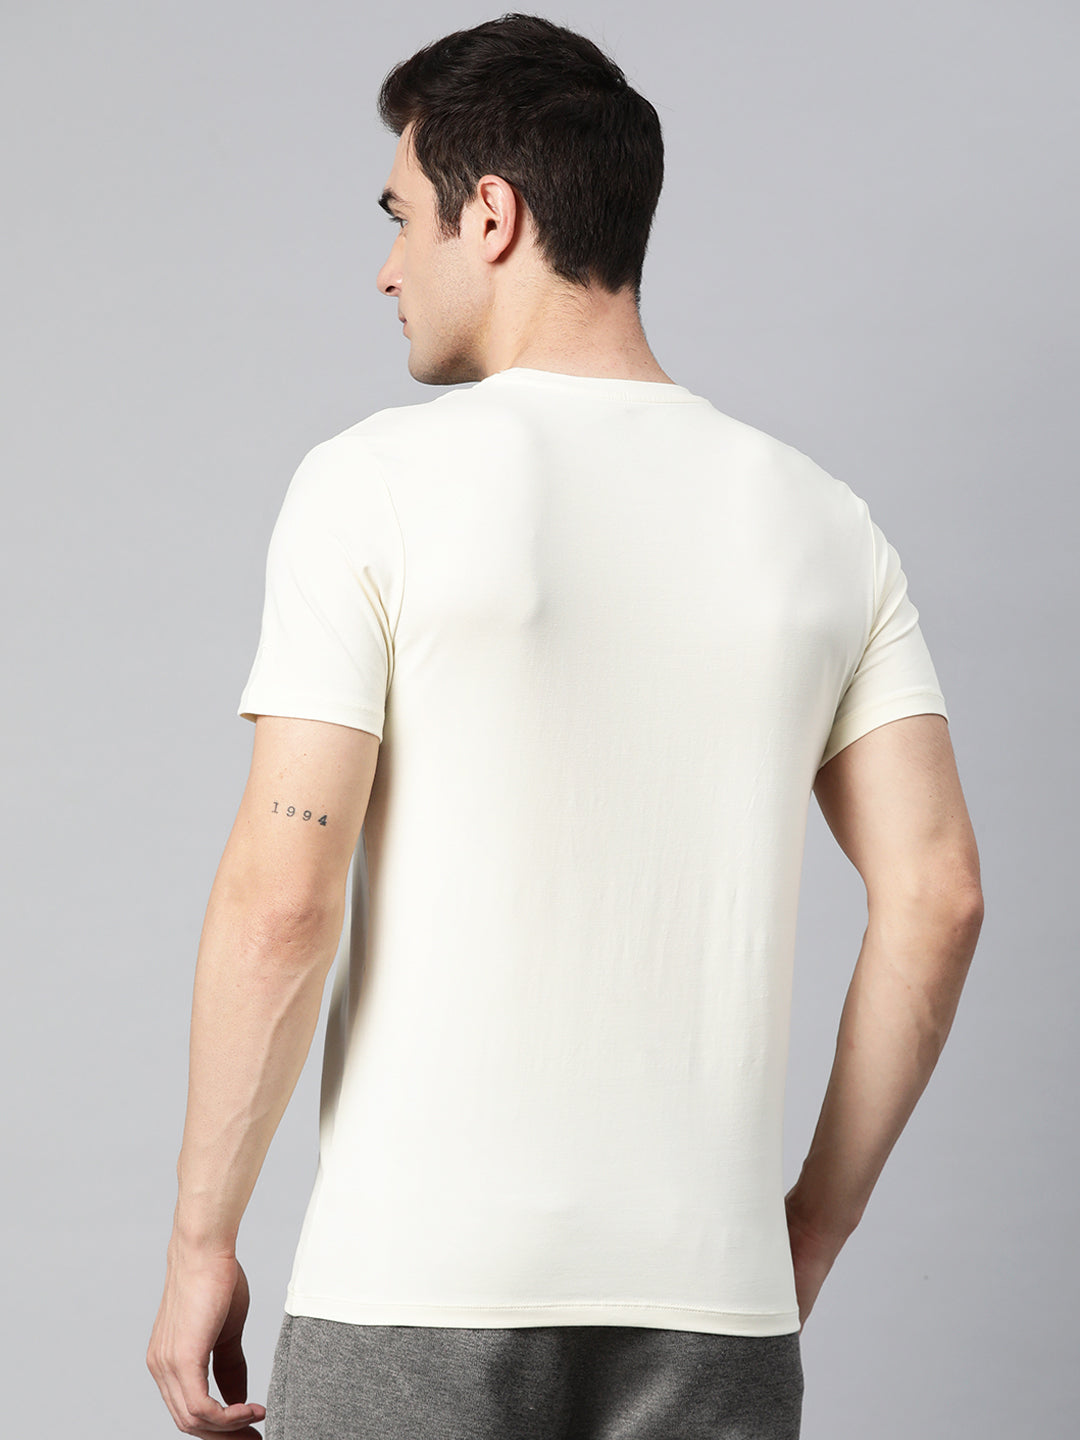 Alcis Men Solid Stretchex Slim Fit T-shirt